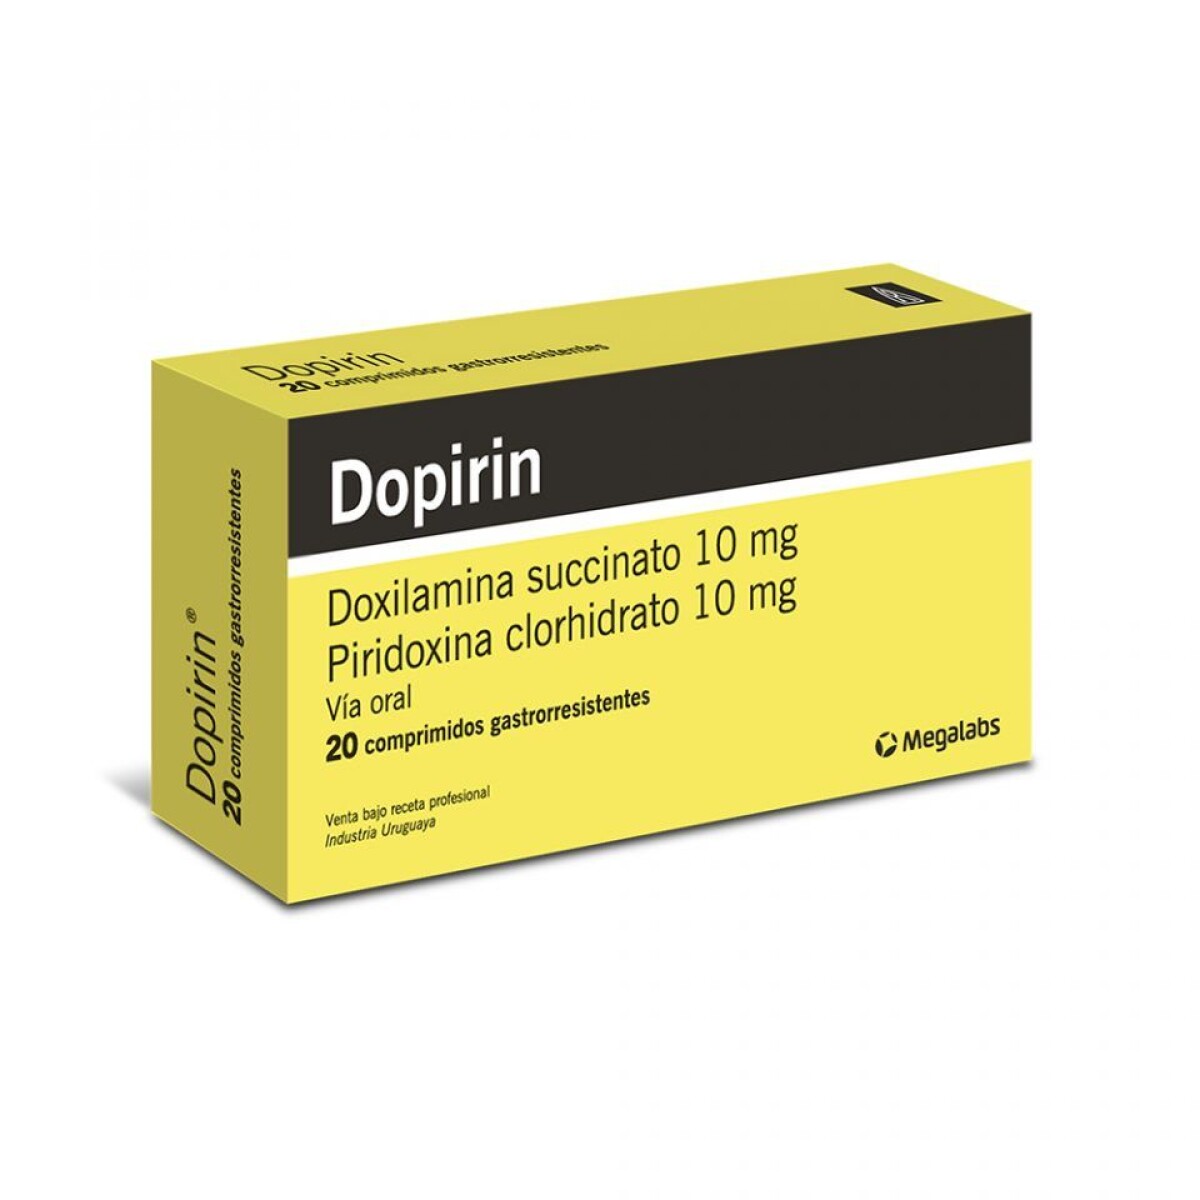 DOPIRIN 20 COMPRIMIDOS 